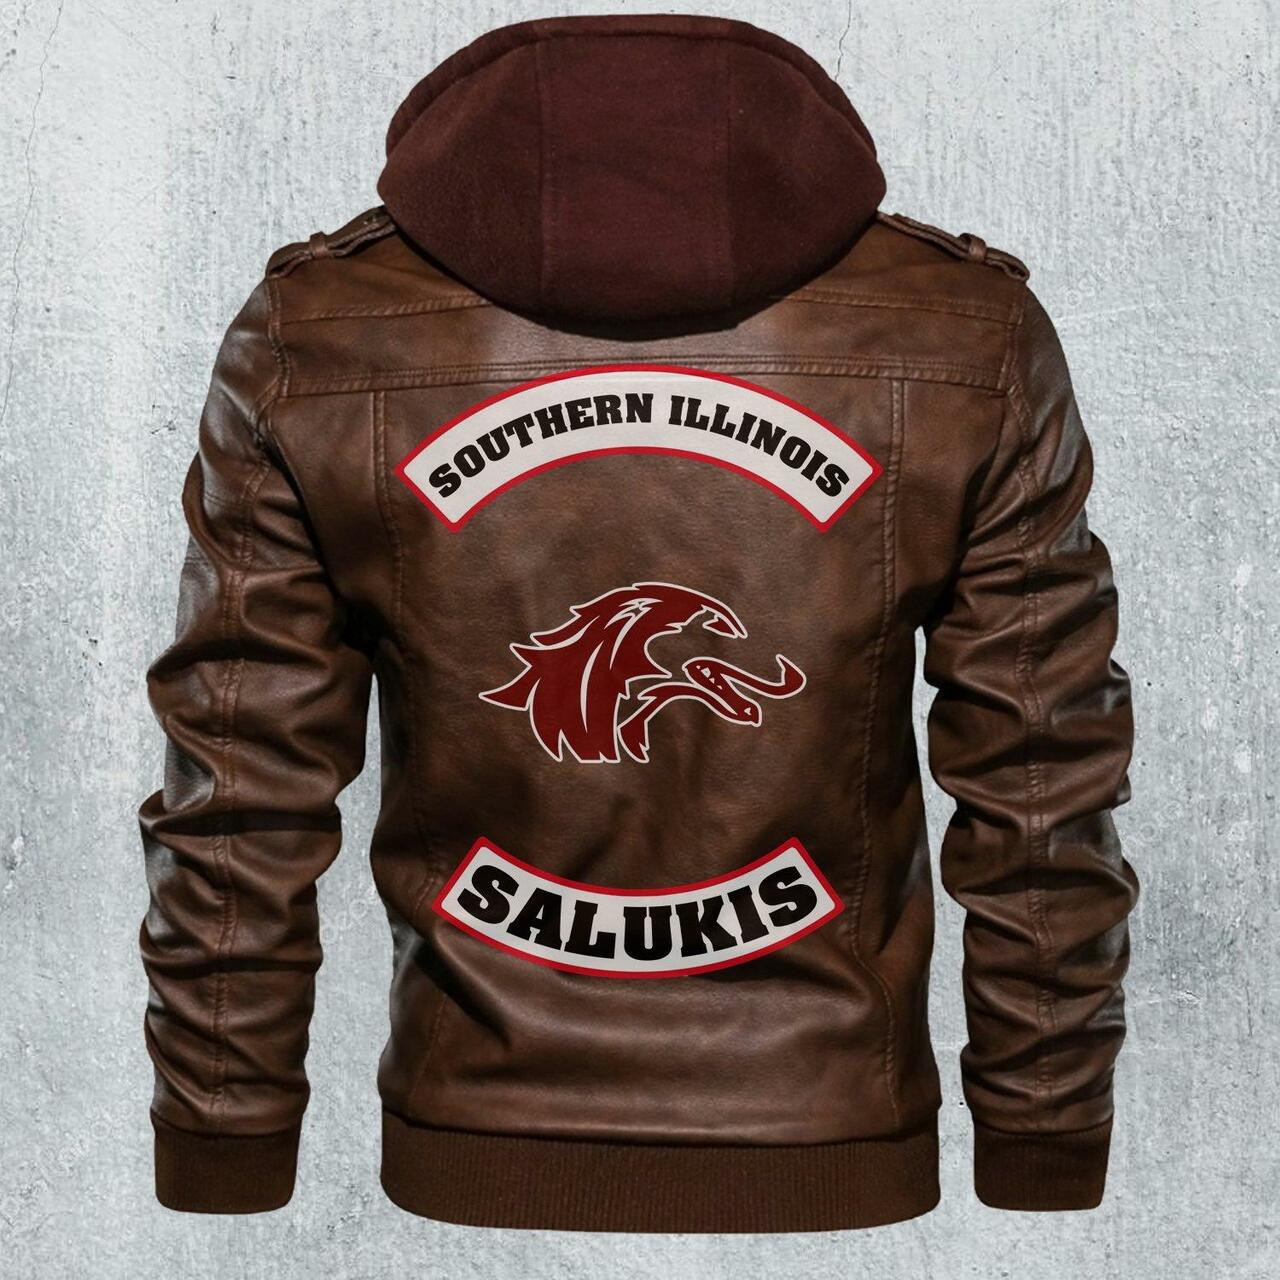 Top leather jacket Sells Best on Techcomshop 112